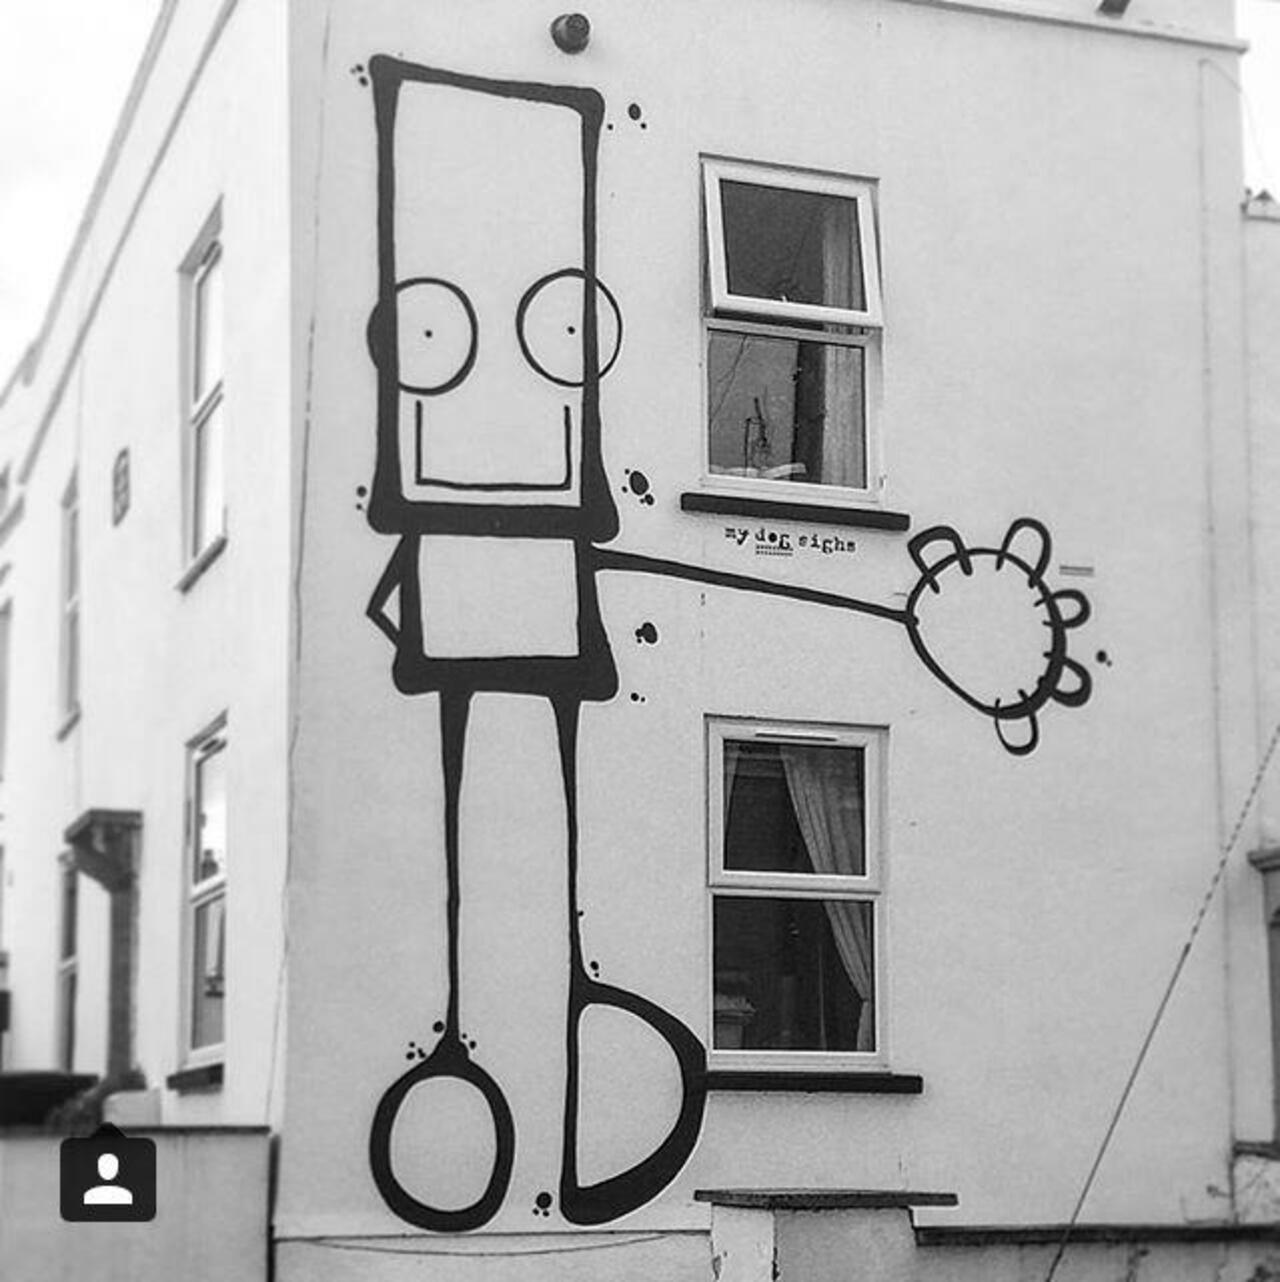 RT @GoogleStreetArt: Fun Street Art by My Dog Sighs 

#art #arte #graffiti #streetart http://t.co/QLXWhpSGiu